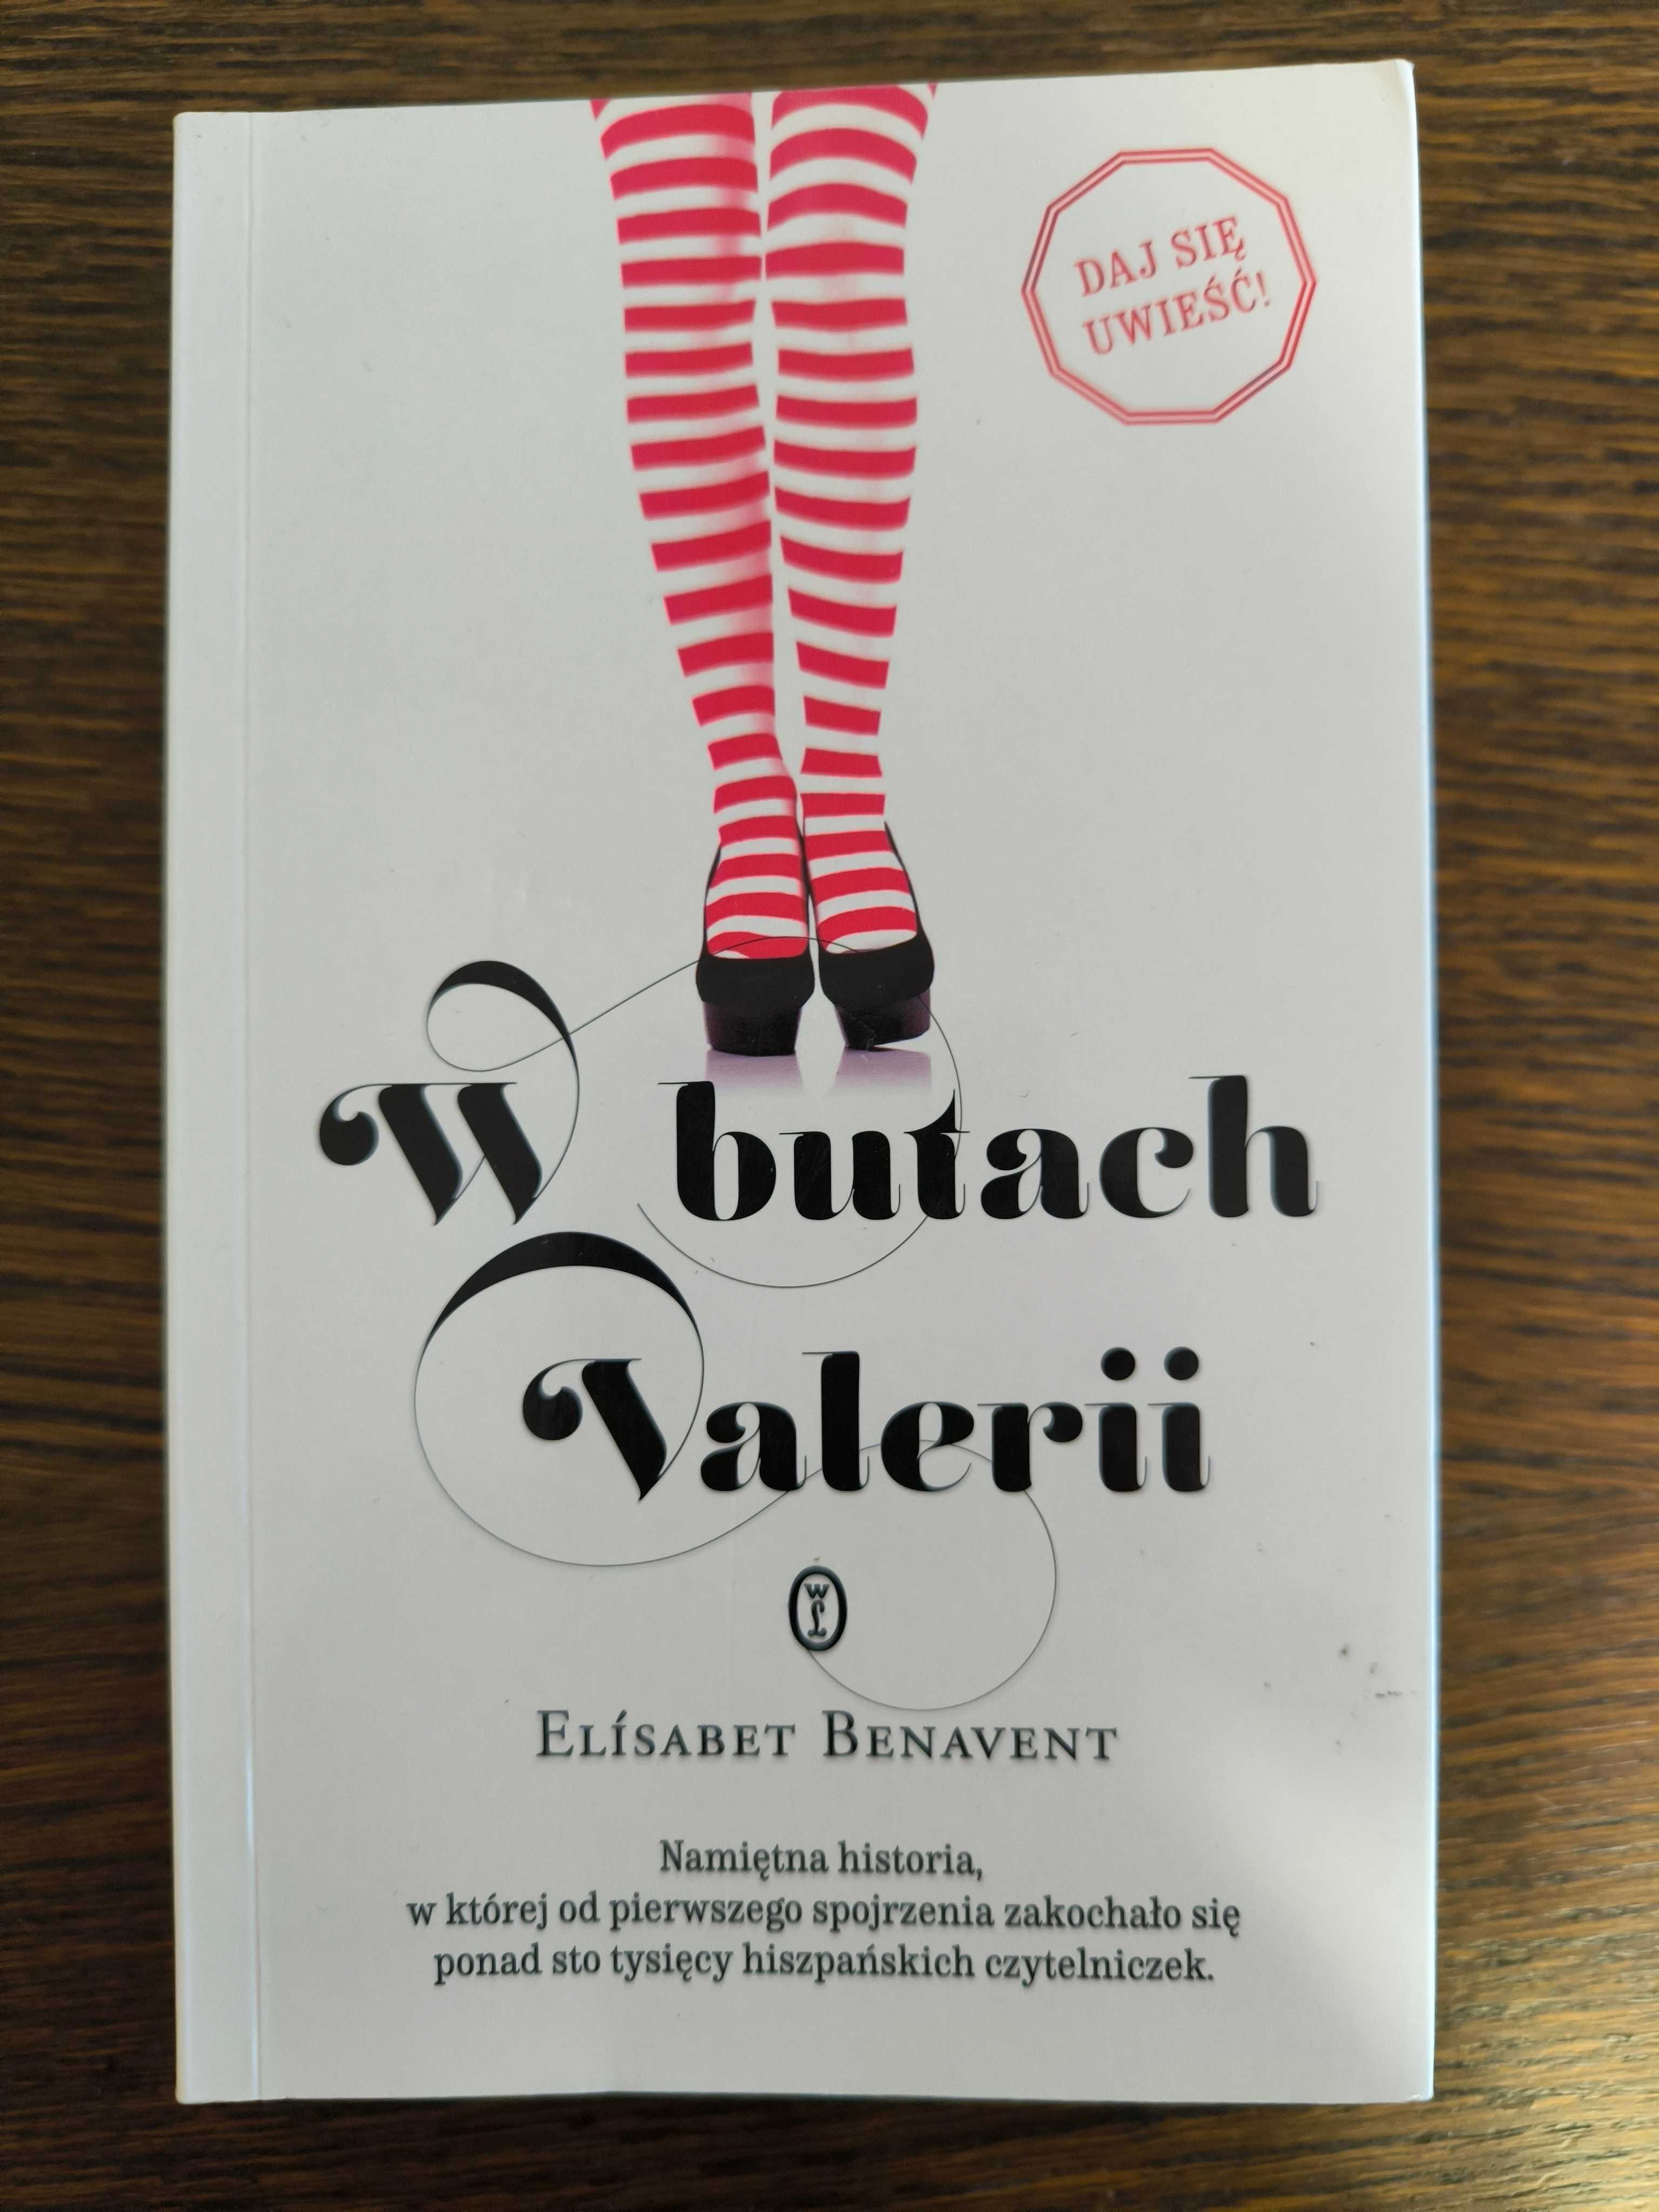 W Butach Valerii - Elisabet Benavent